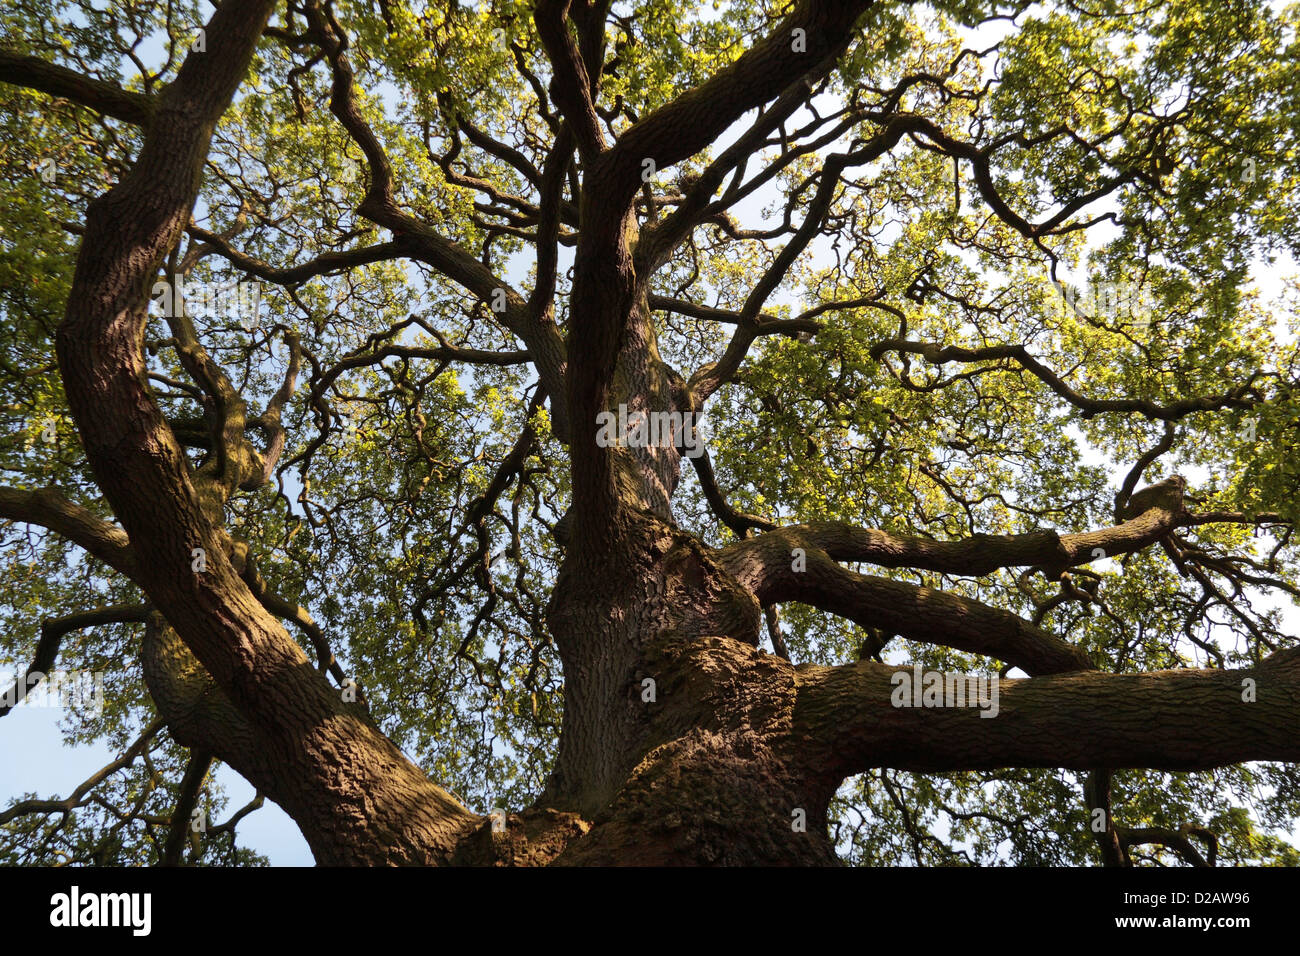 The truck & branches of a Lucombe Oak tree (Quercus x hispanica 'Lucombeana') in the Royal Botanic Gardens, Kew, London, UK. Stock Photo